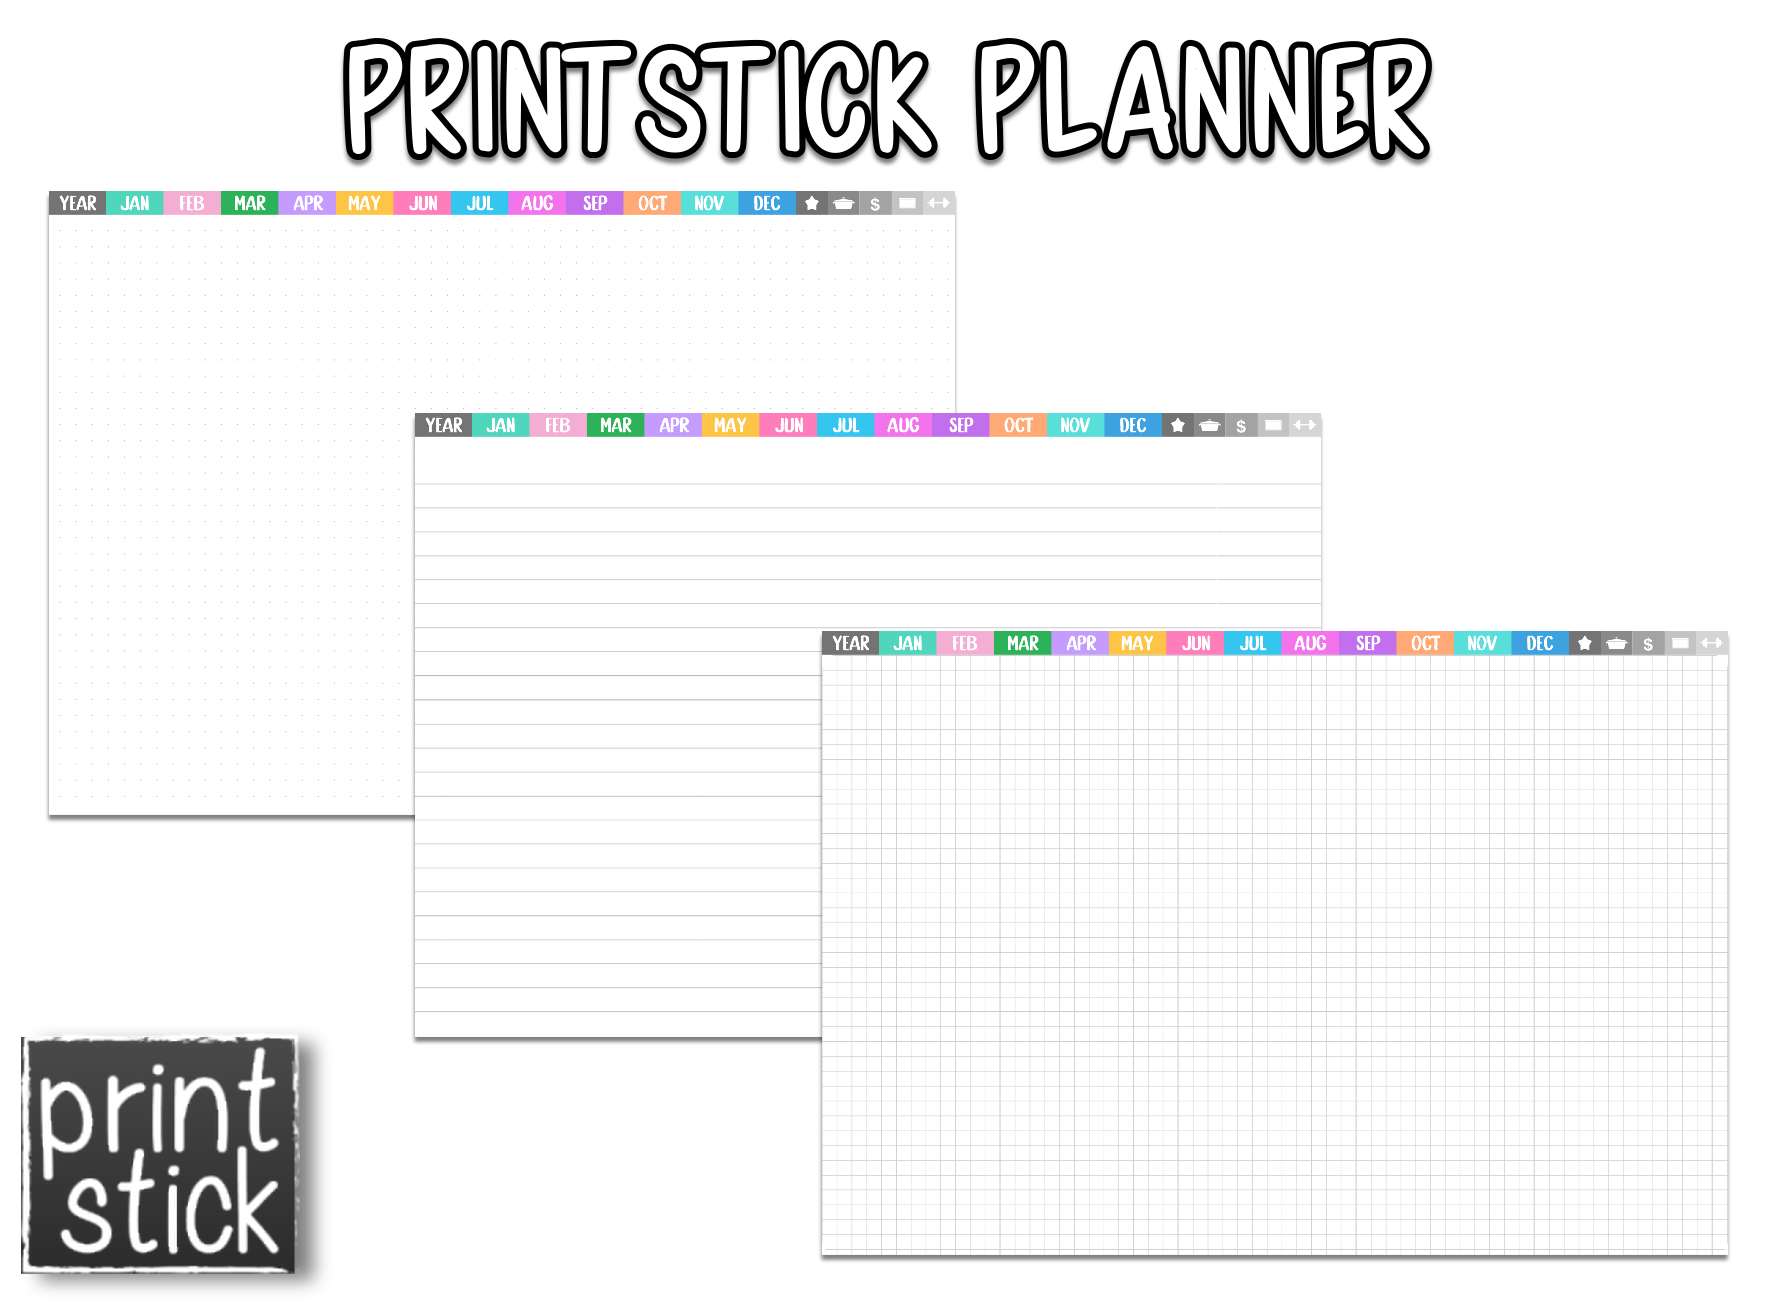 En Español: PrintStick Digital Planner - Print Stick